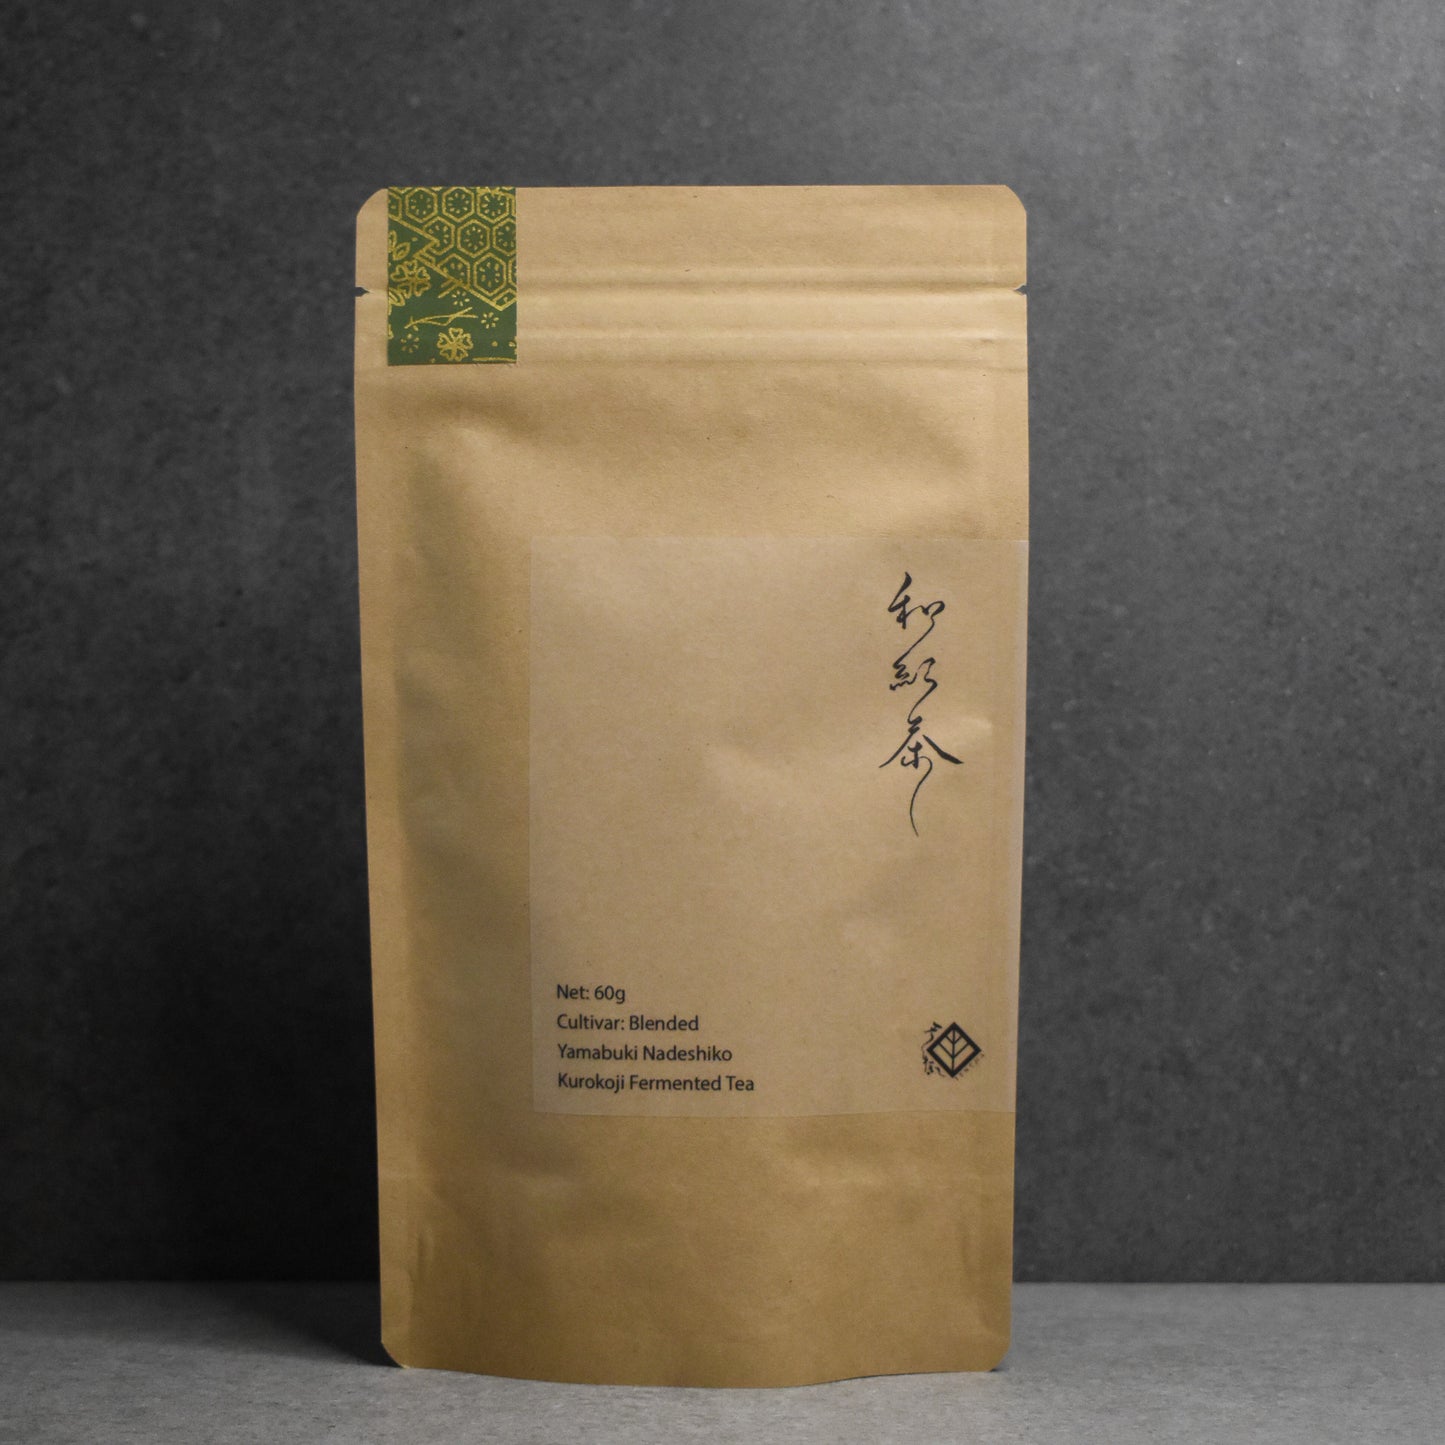 Osada Tea: Yamabuki Nadeshiko, Kurokoji Fermented Tea